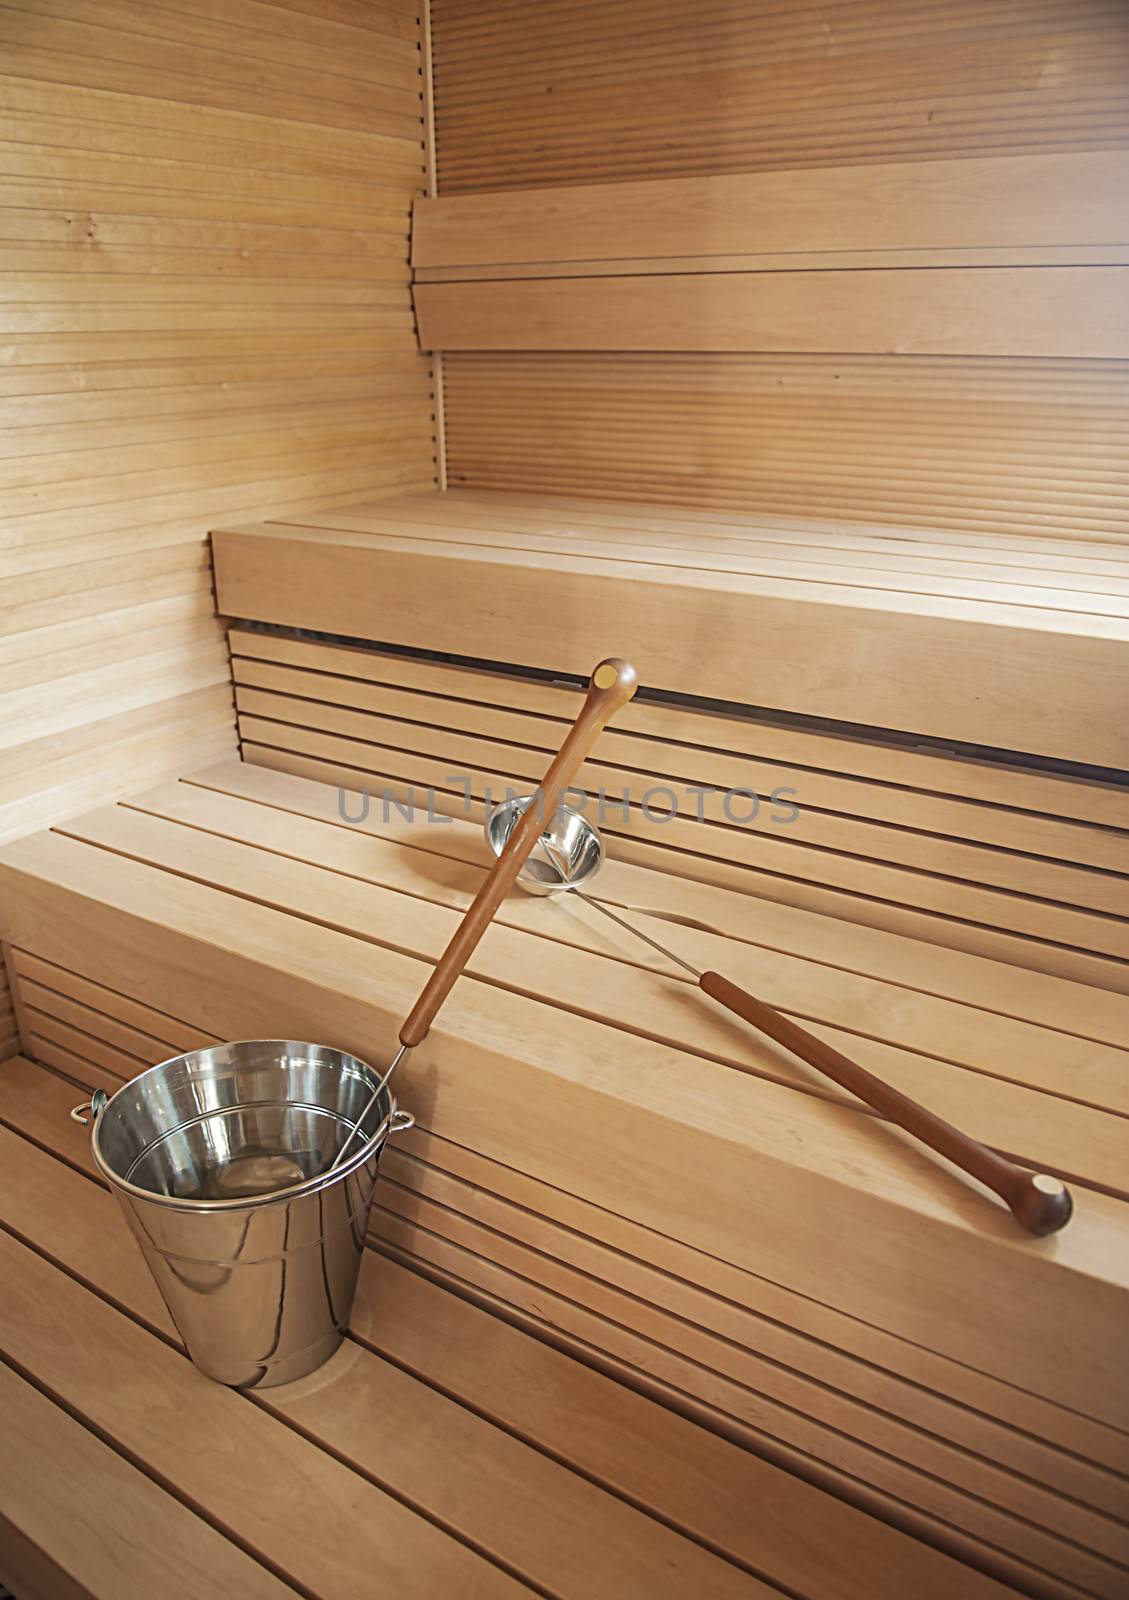 Bucket and scoop in wooden finnish sauna background.